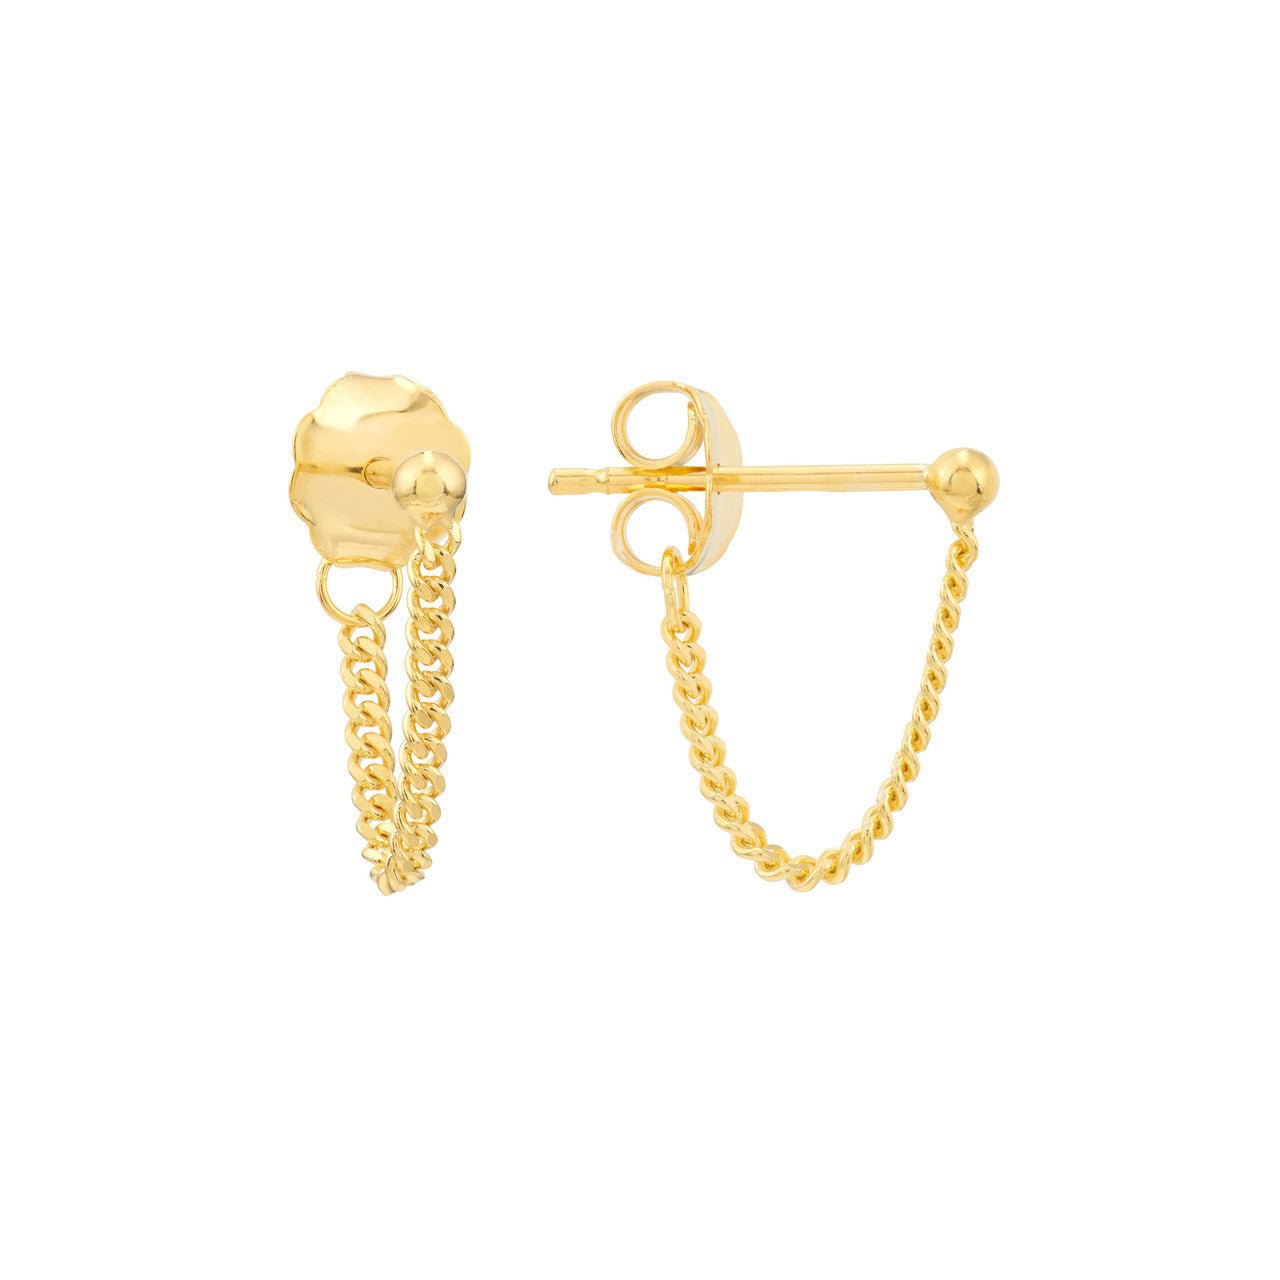 Latest gold earrings designs - Simple Craft Idea